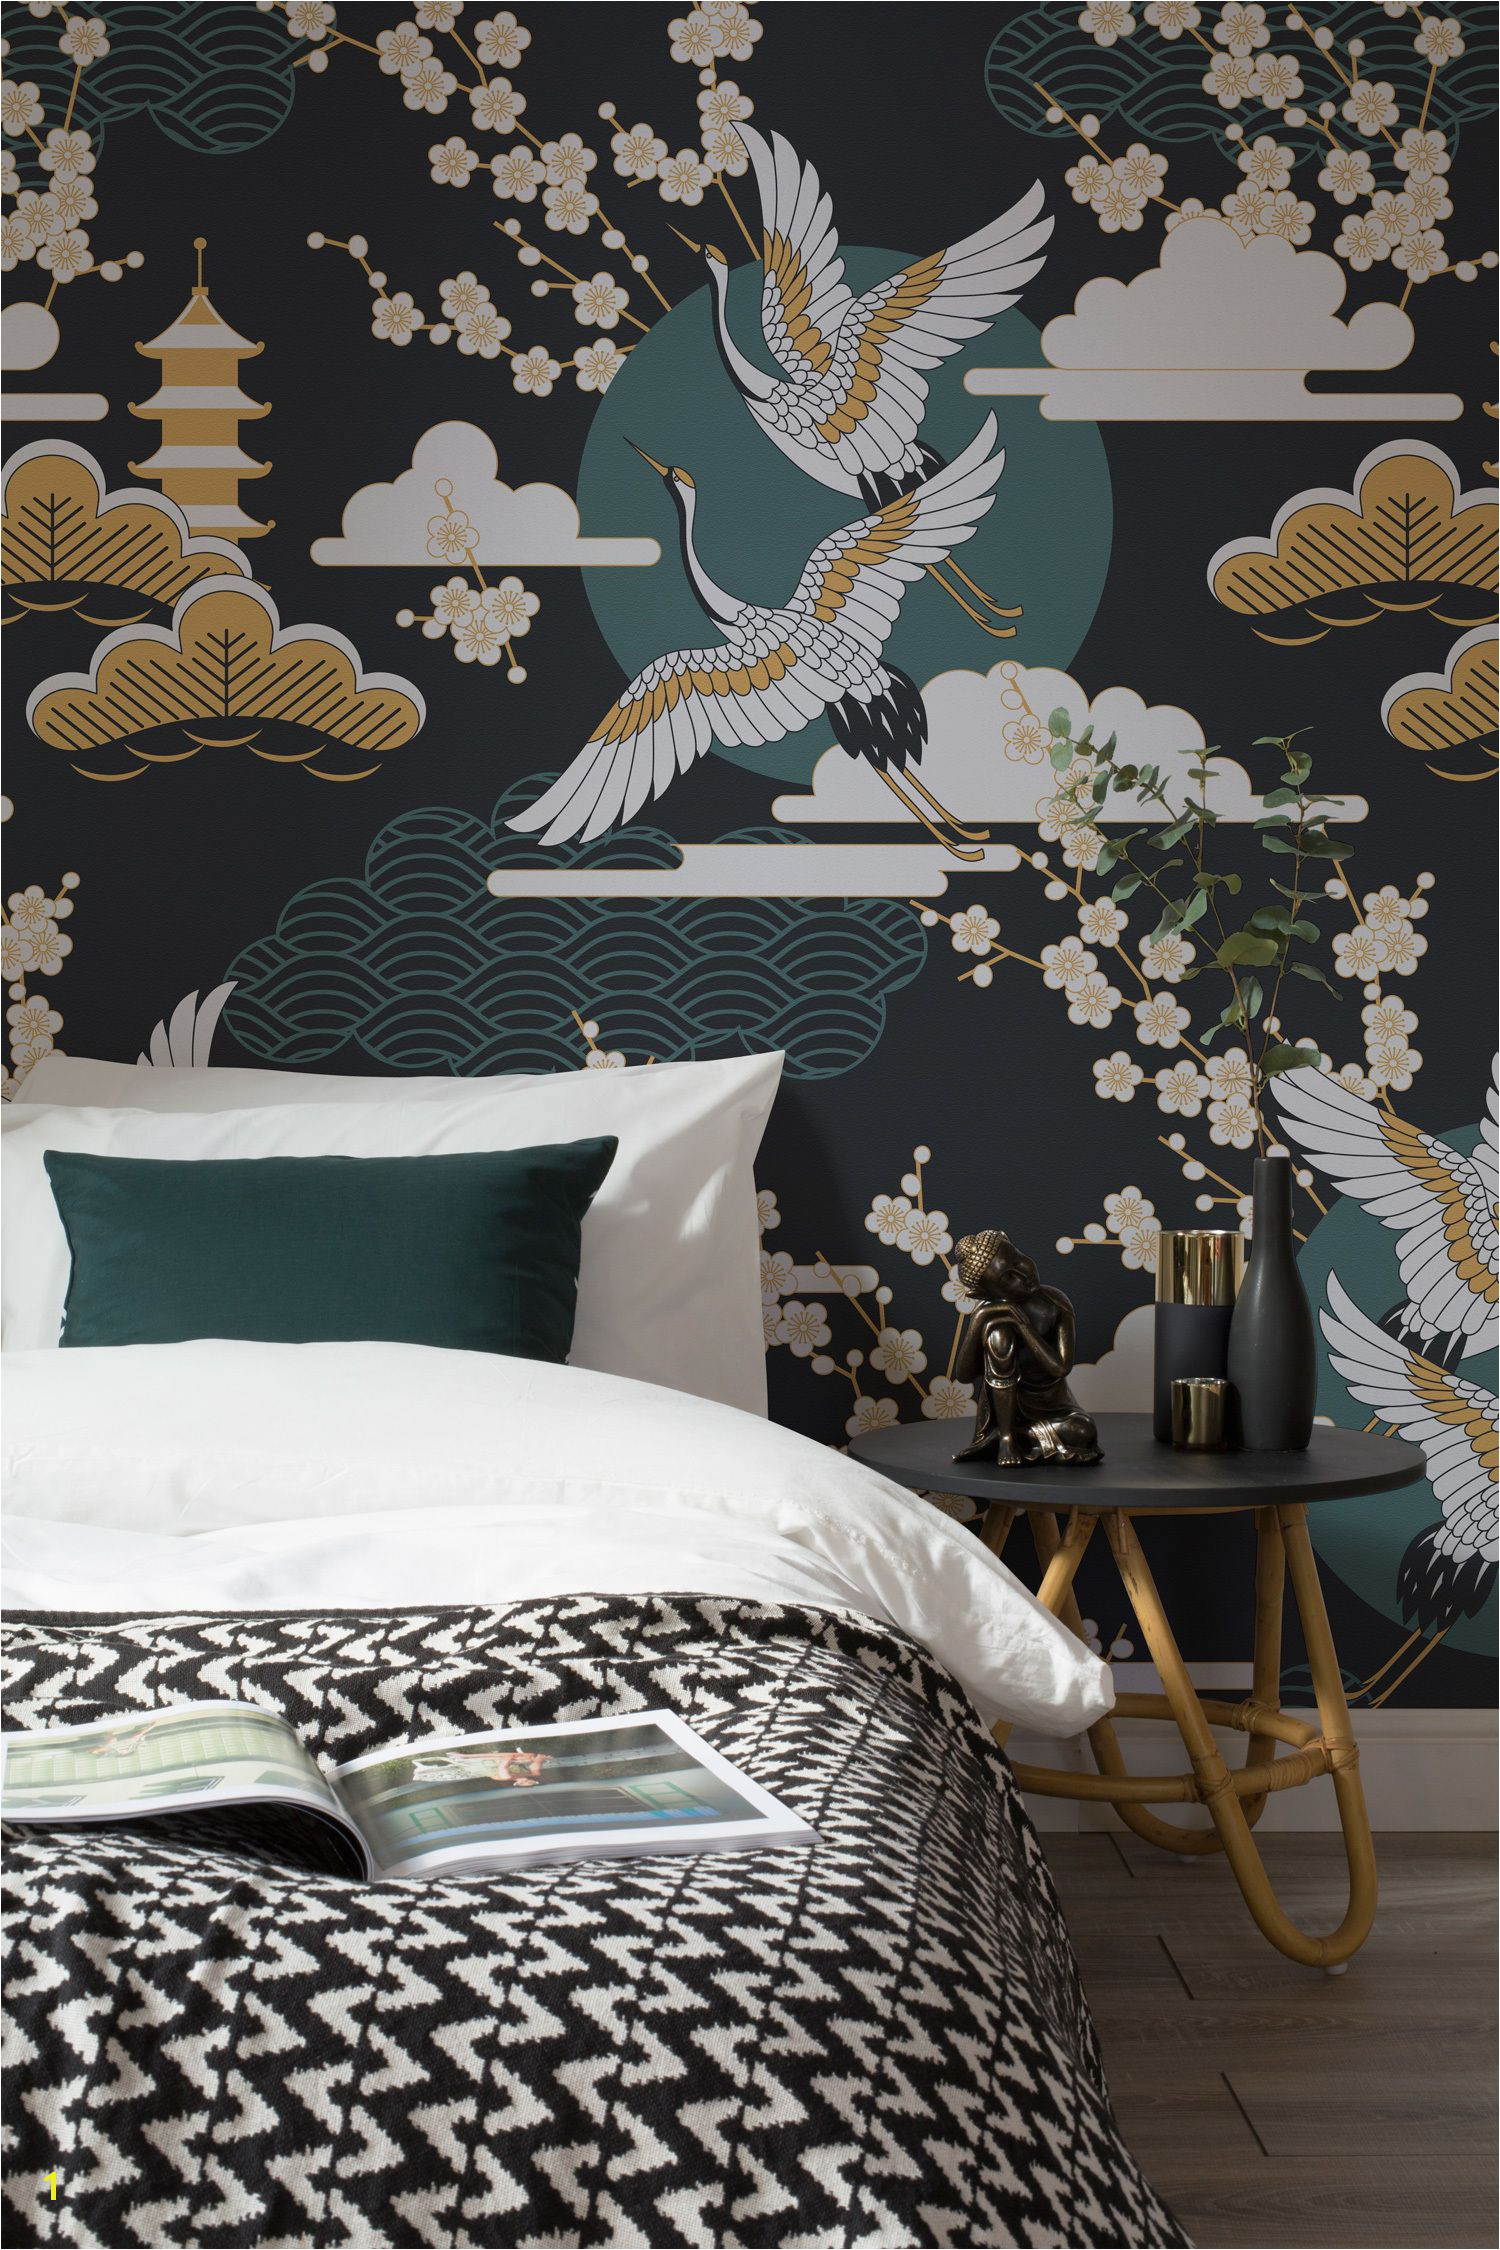 Oriental Wall Murals Uk Dark Sky oriental Wallpaper In 2019 Home